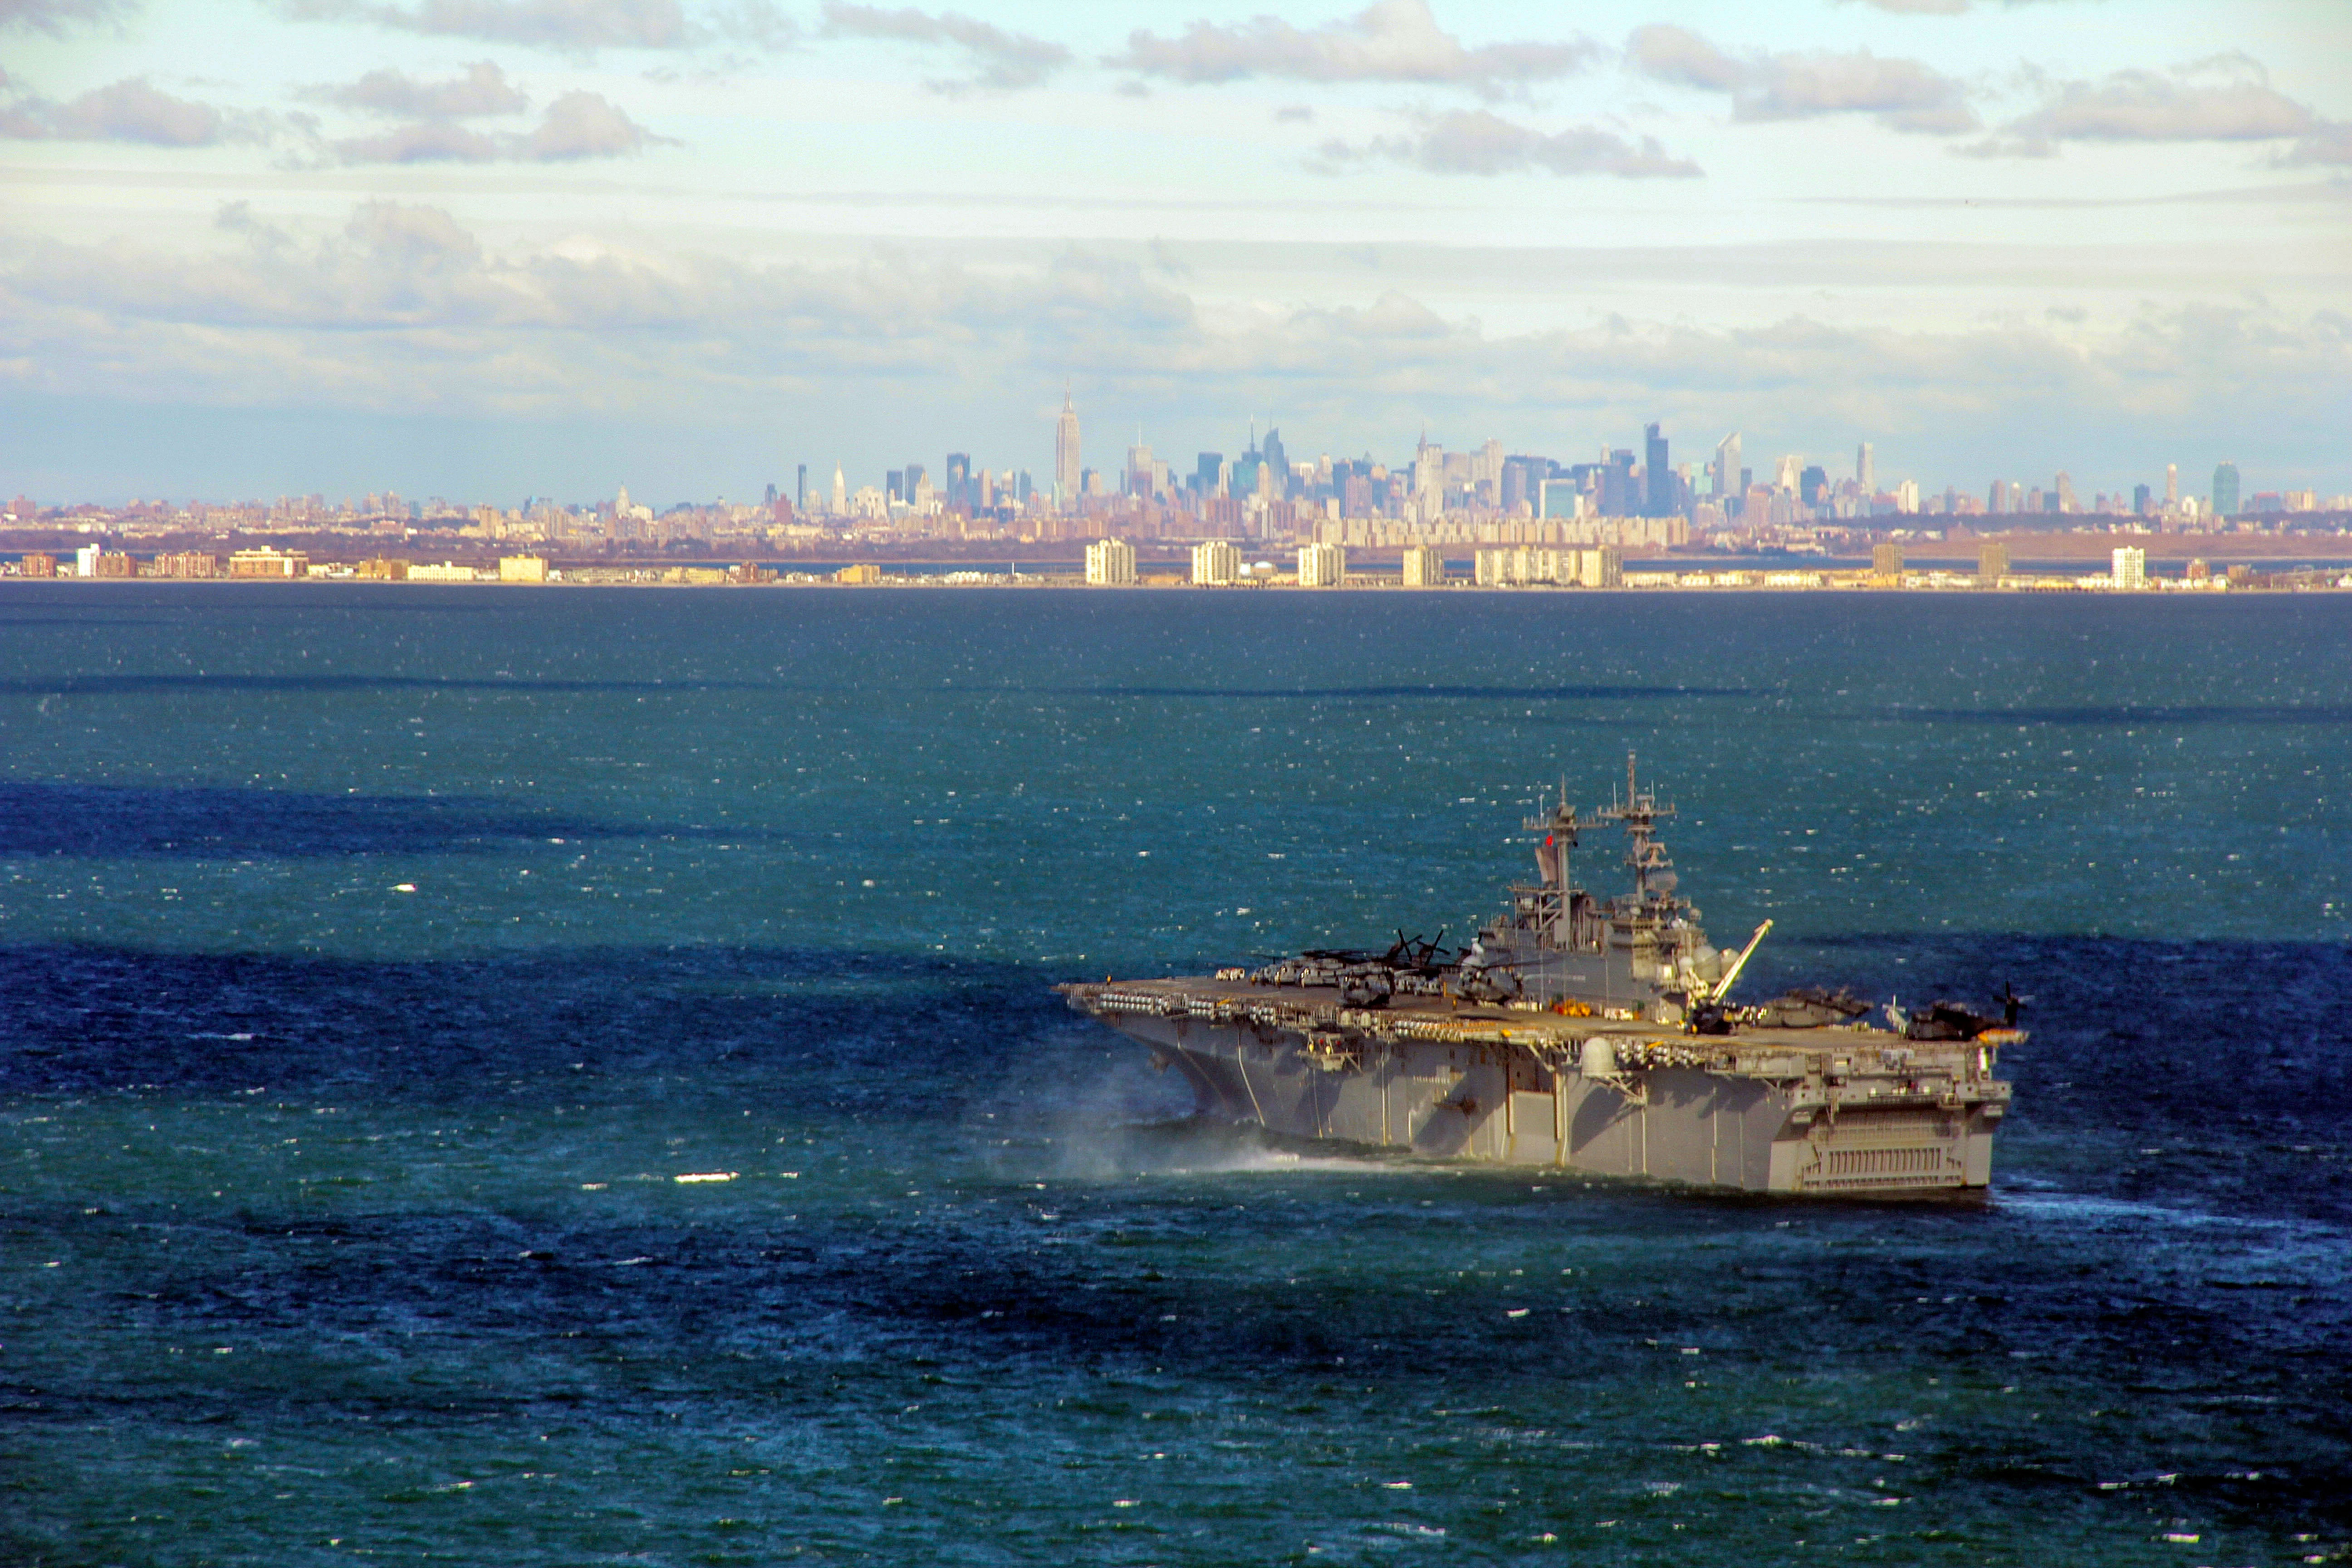 USS WASP LHD-1 am 03.11.2012 vor New YorkBild: U.S. Navy